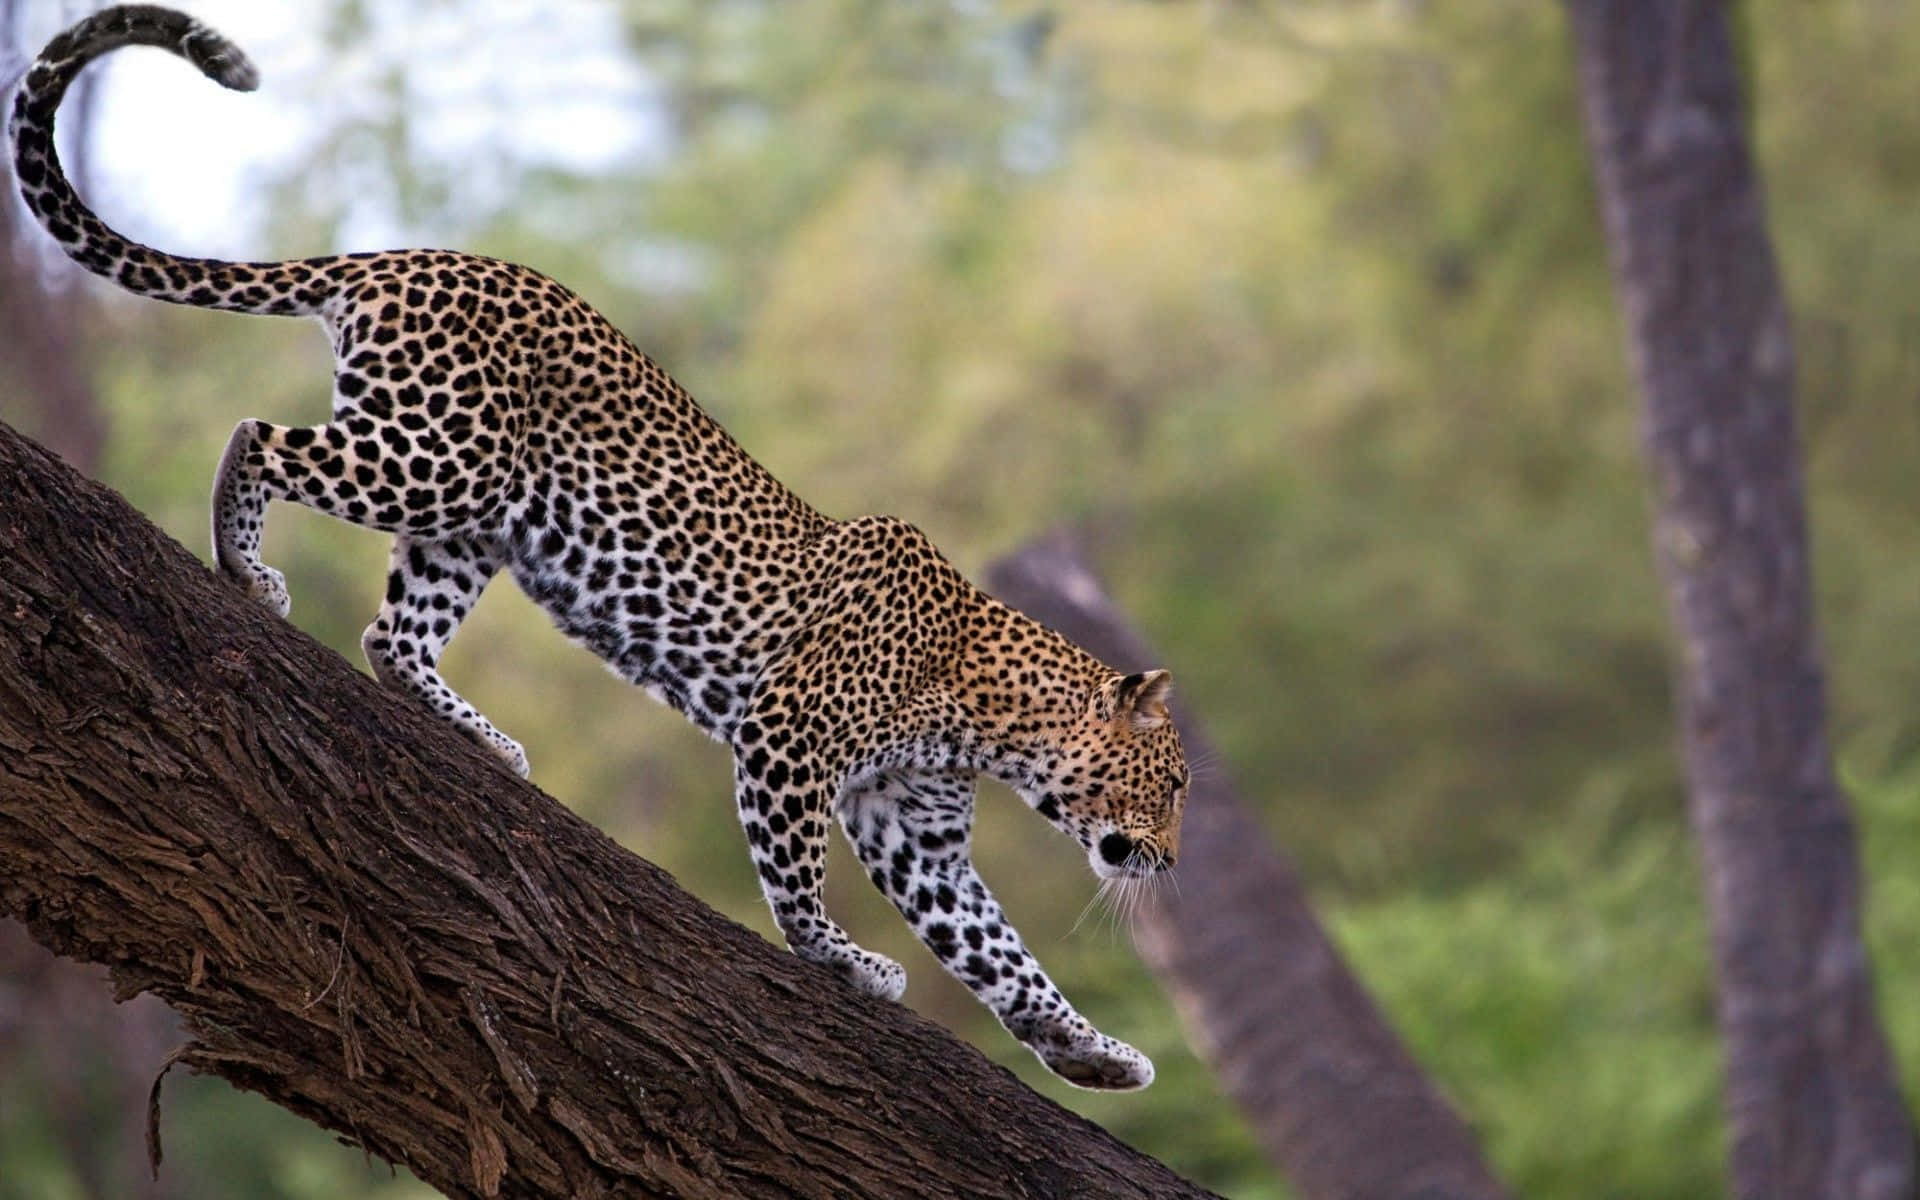 Close-up of a majestic leopard in its natural habitat